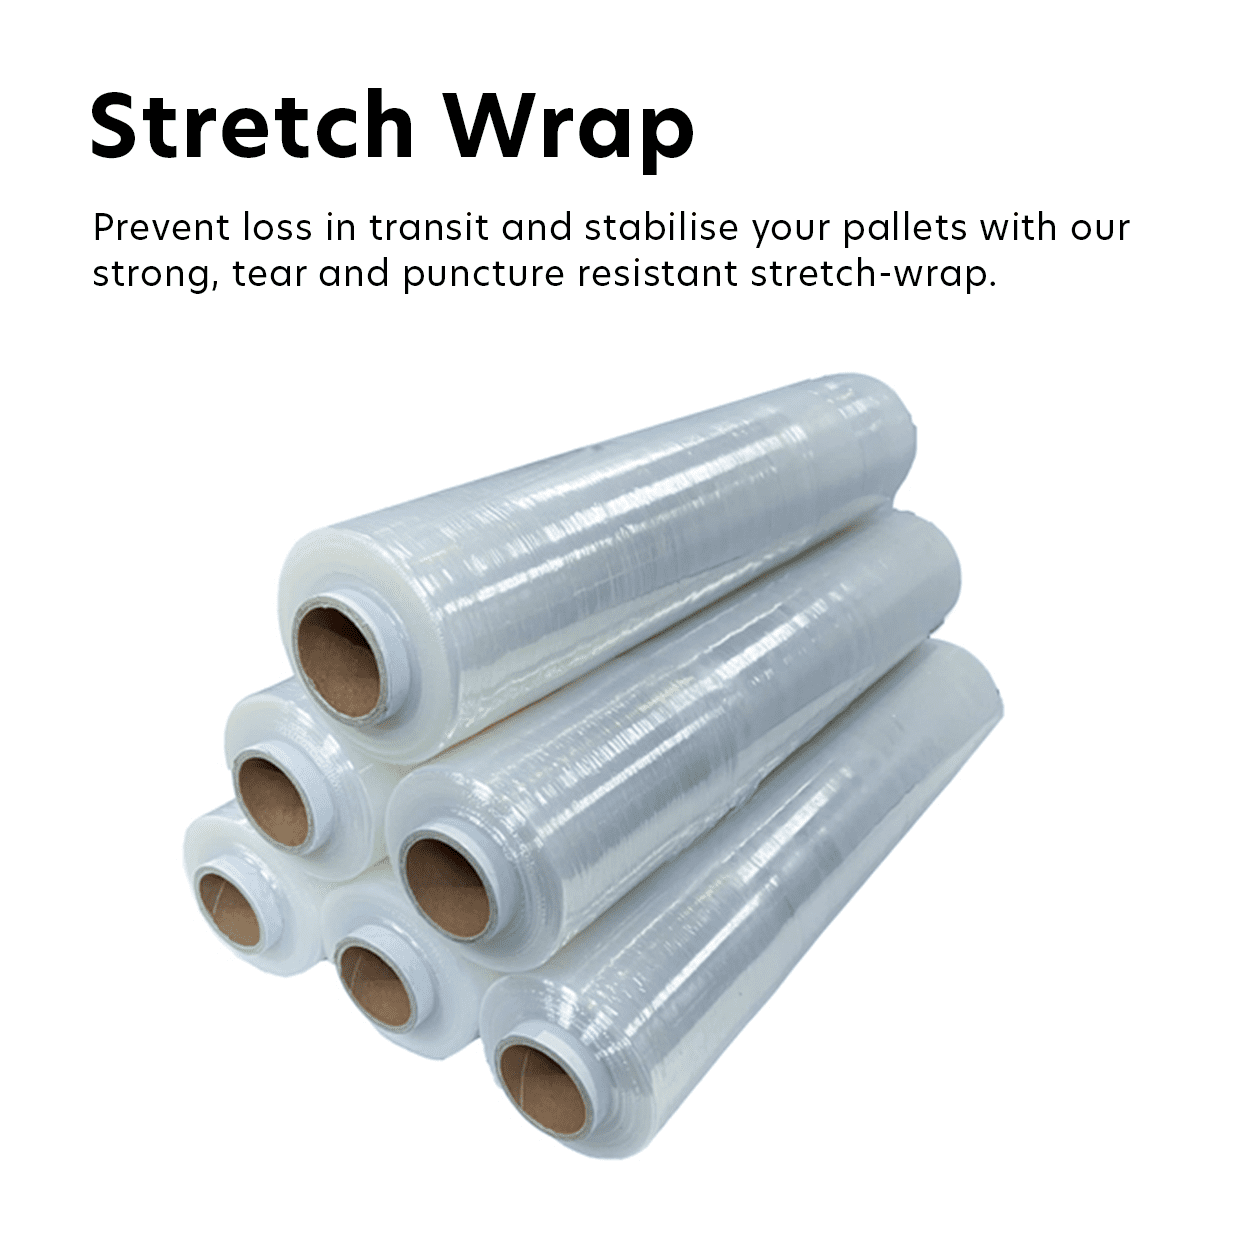 Stretchwrap